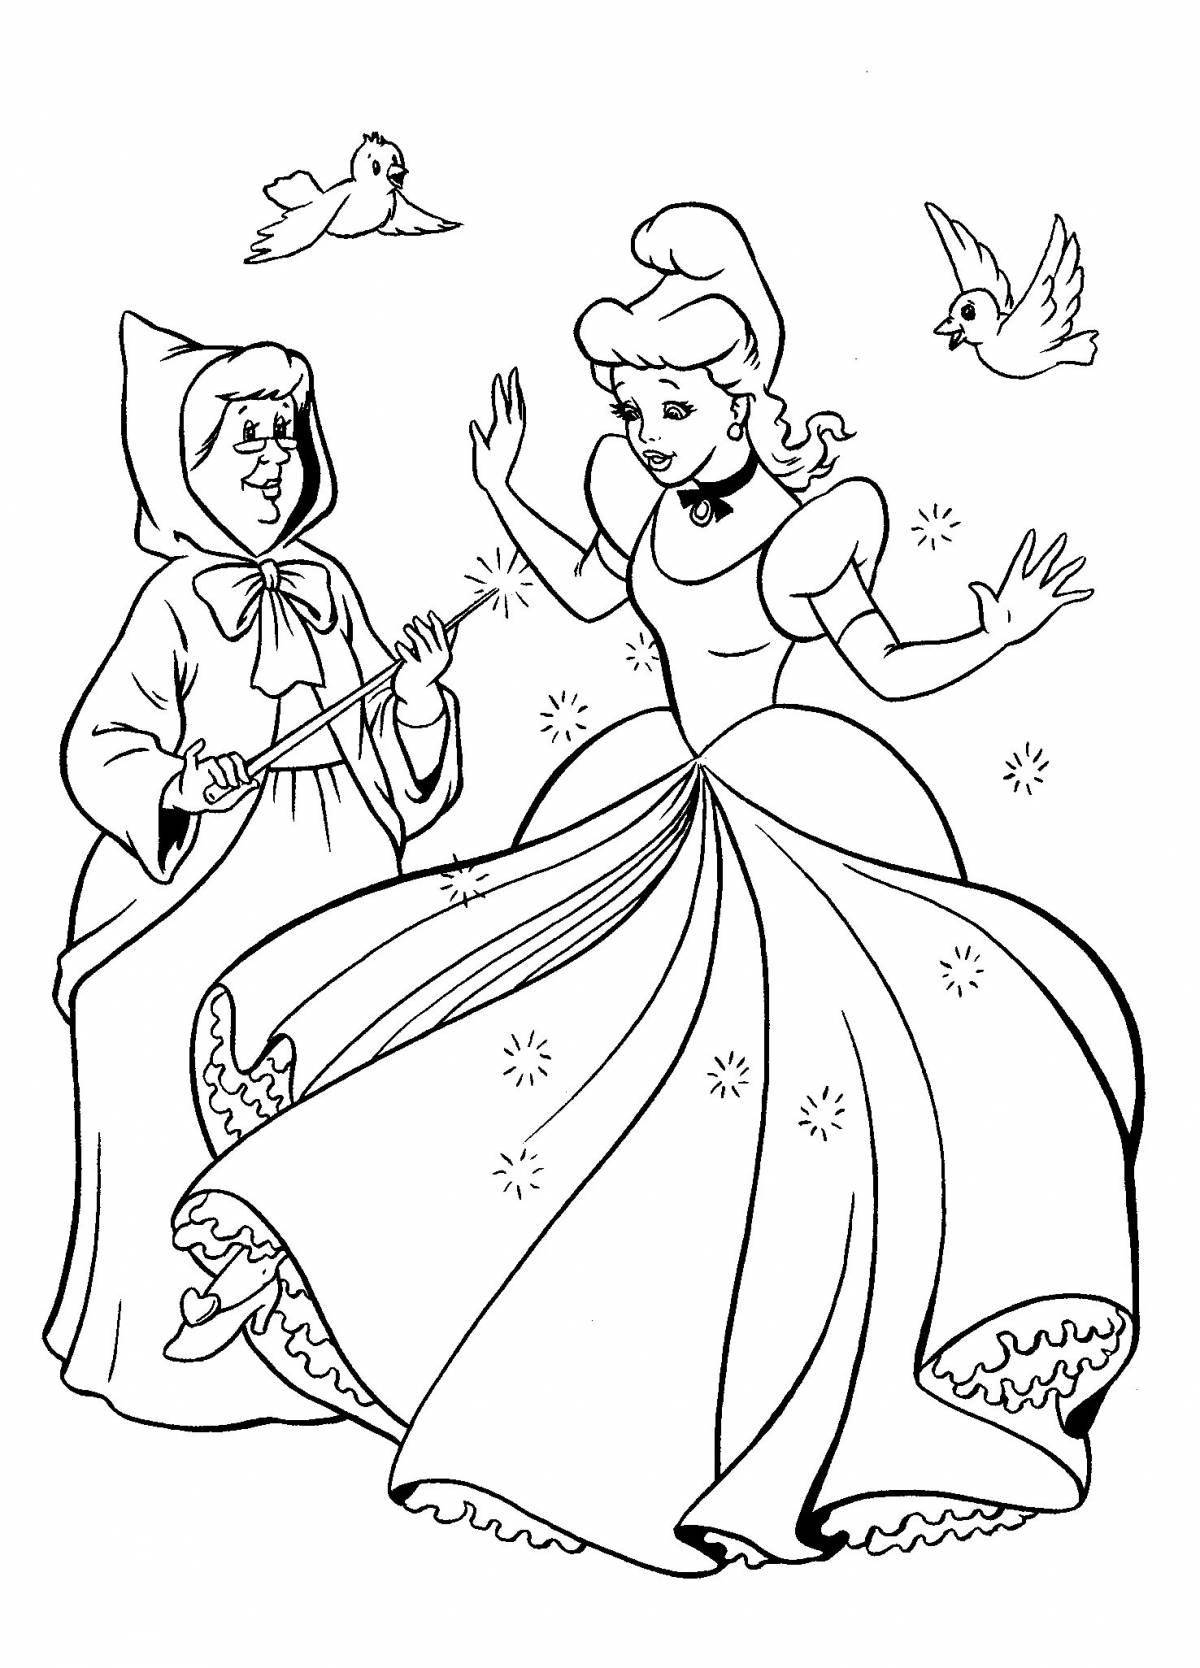 Coloring Cinderella for kids